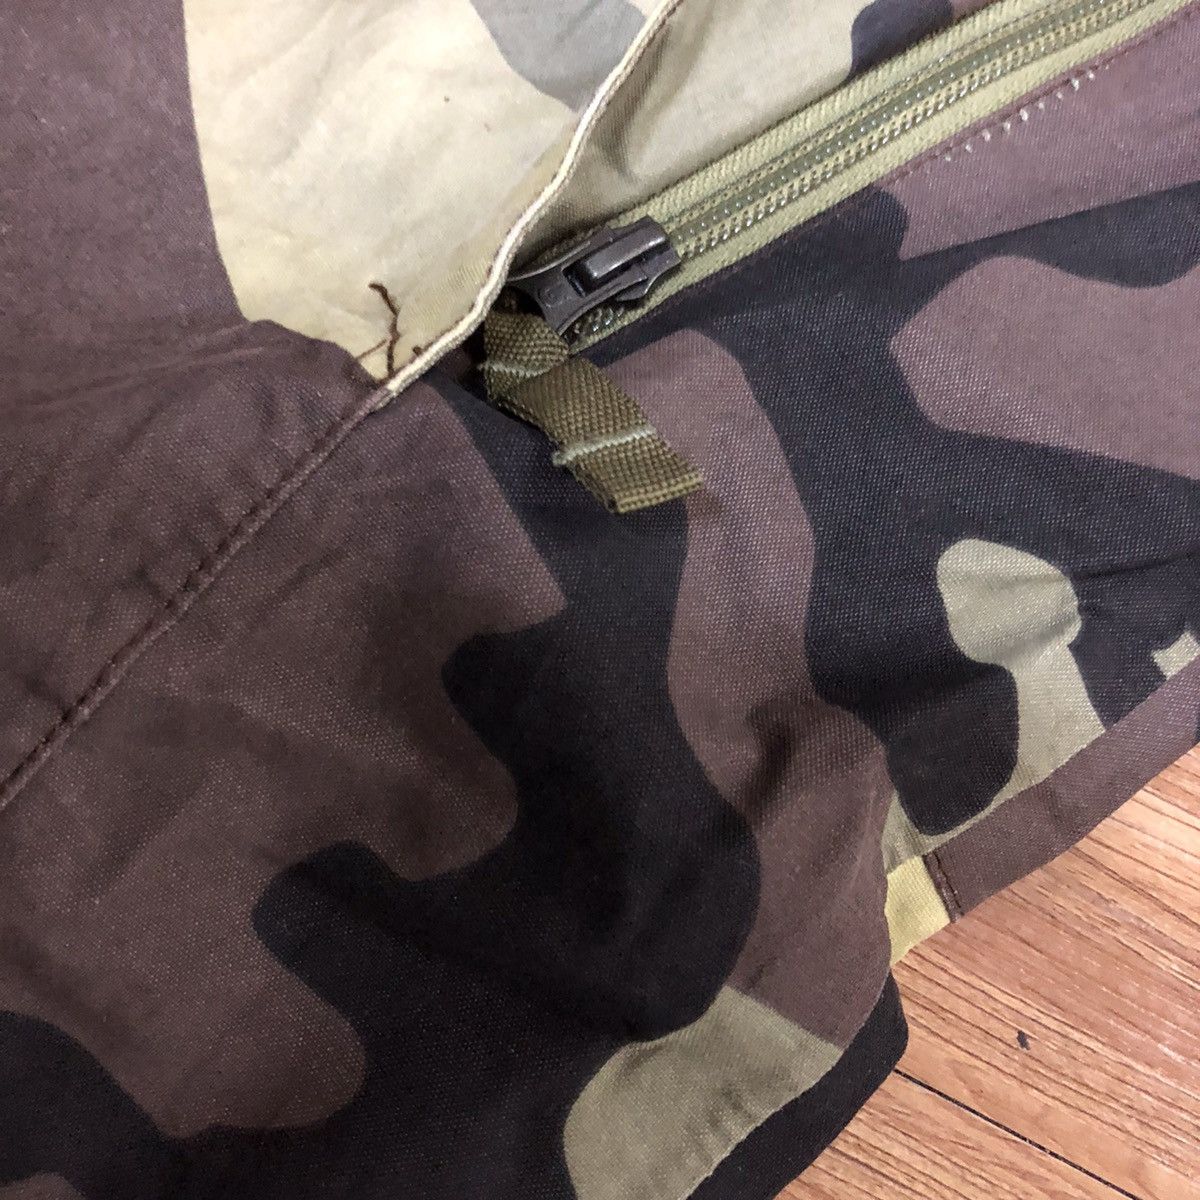 Ronin burton dryride outerwear camouflage snowboard pants - 15